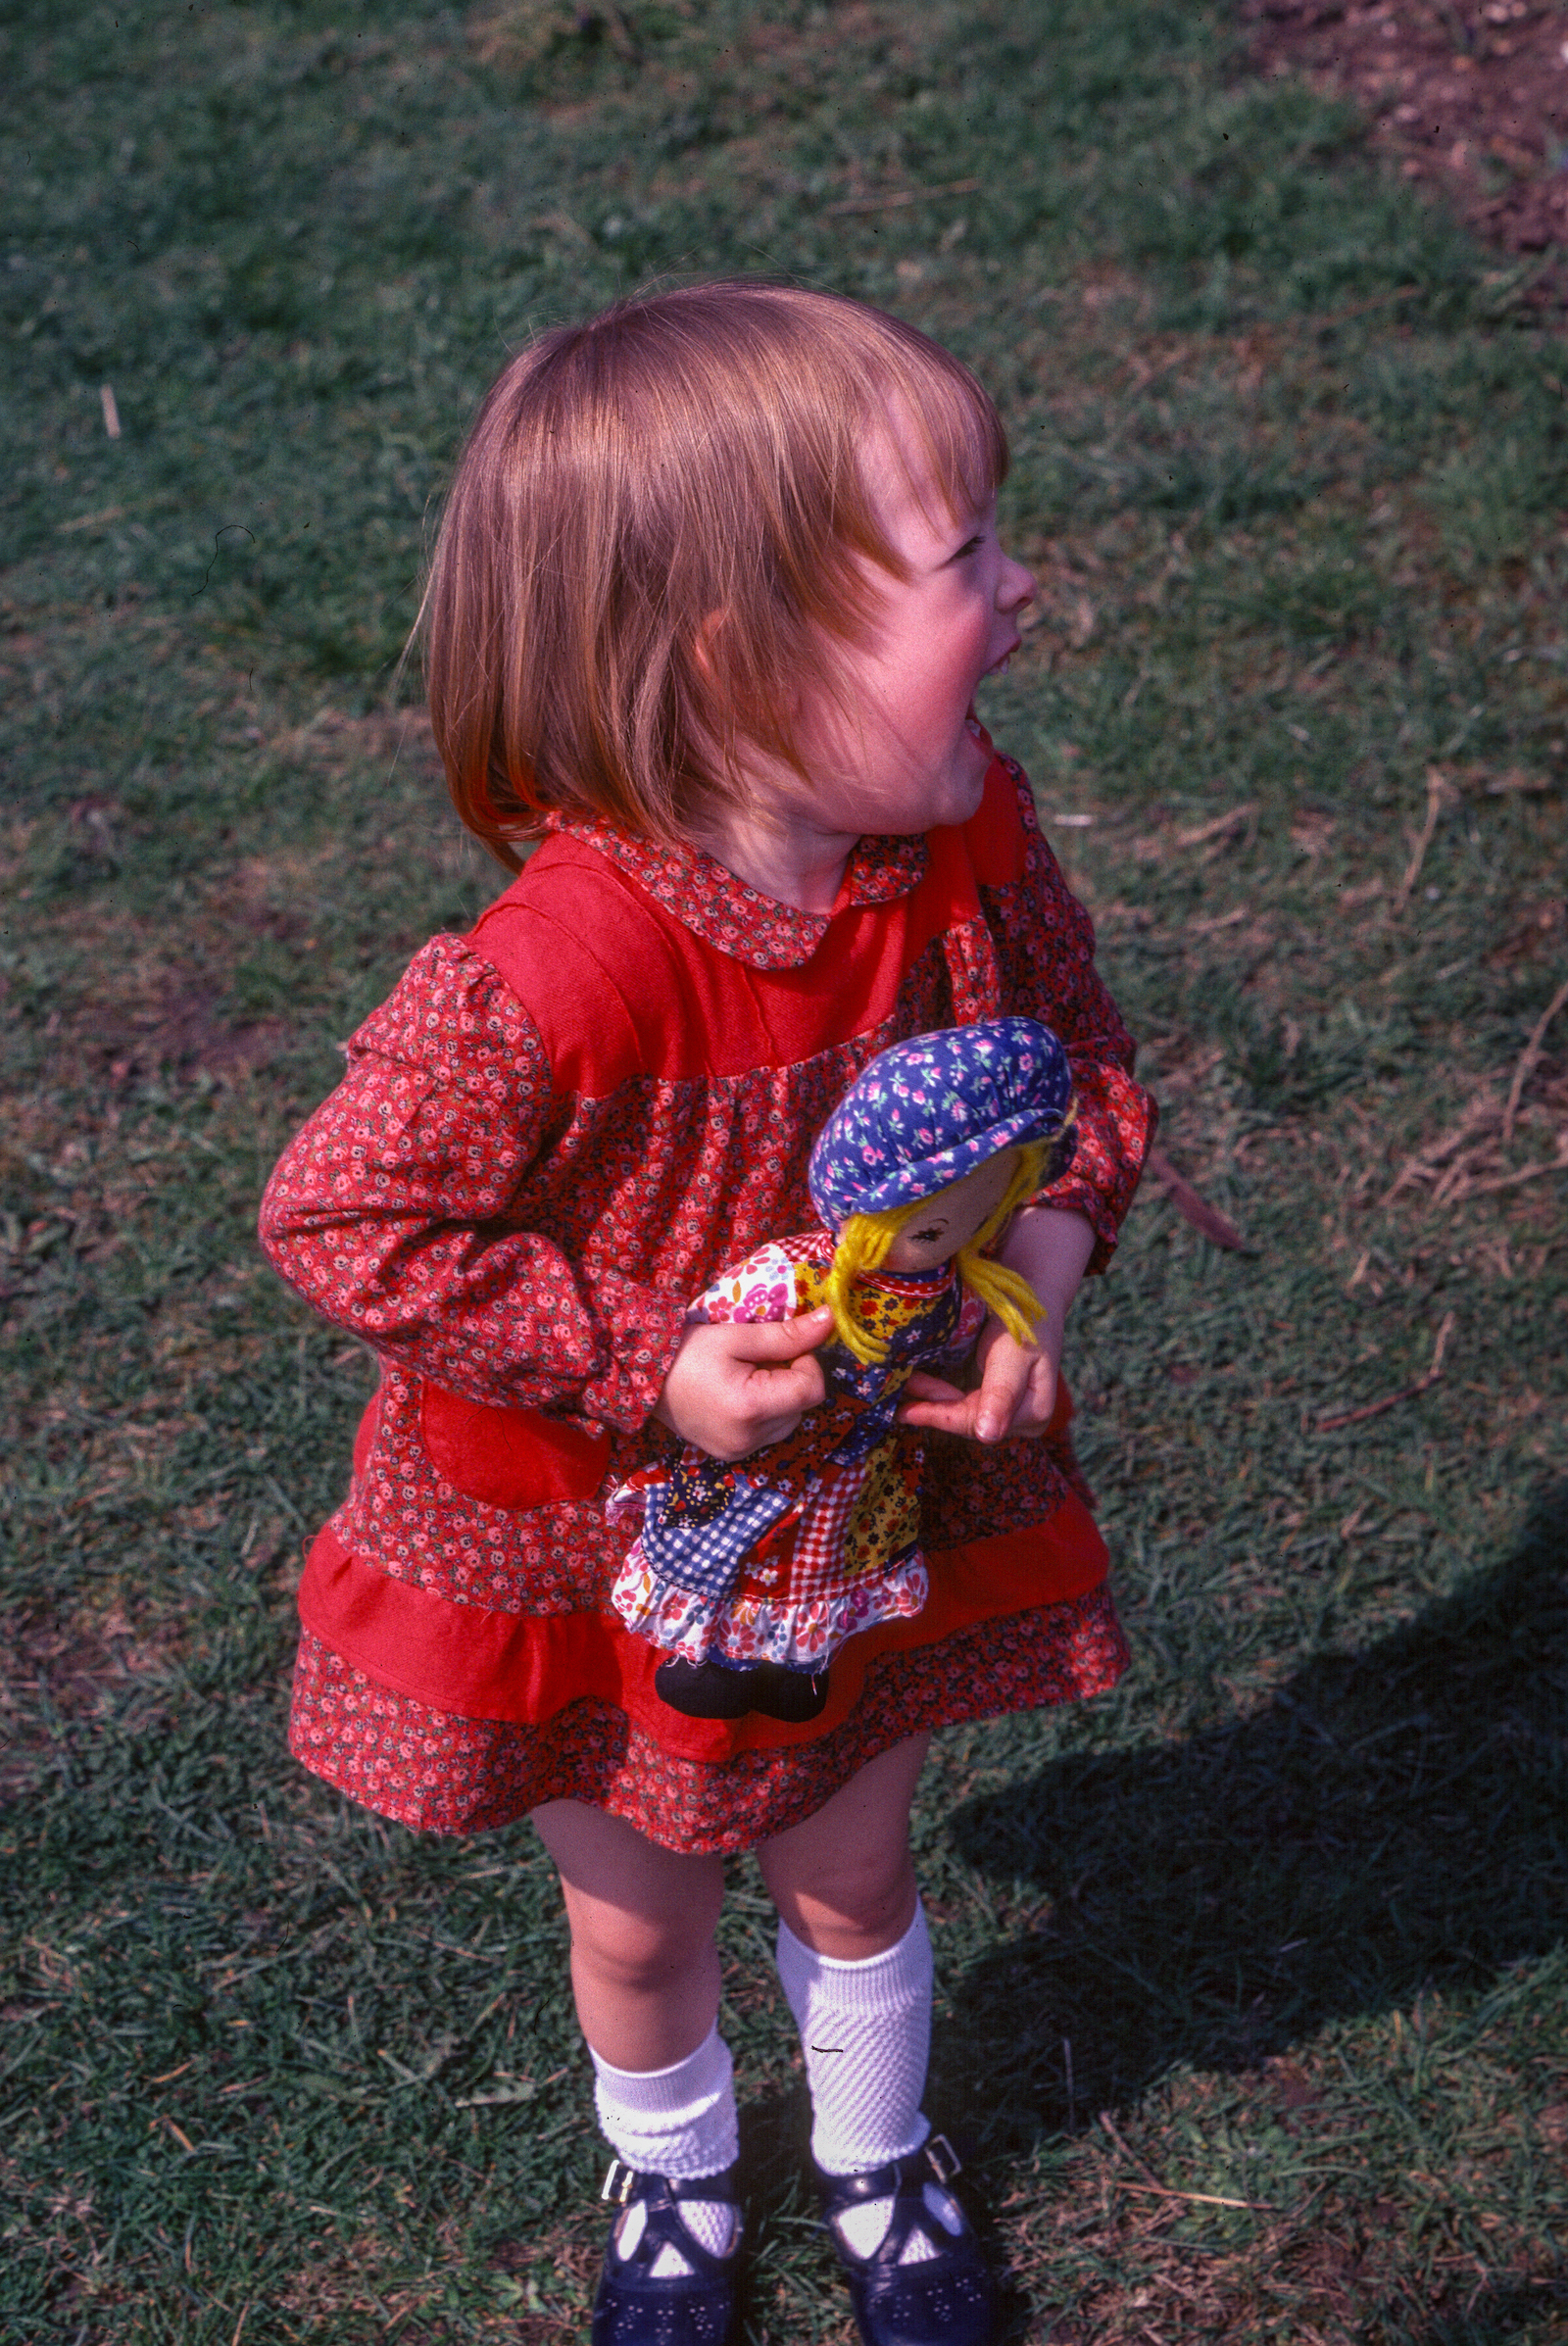 Milton Keynes 1980s found Kodachromes